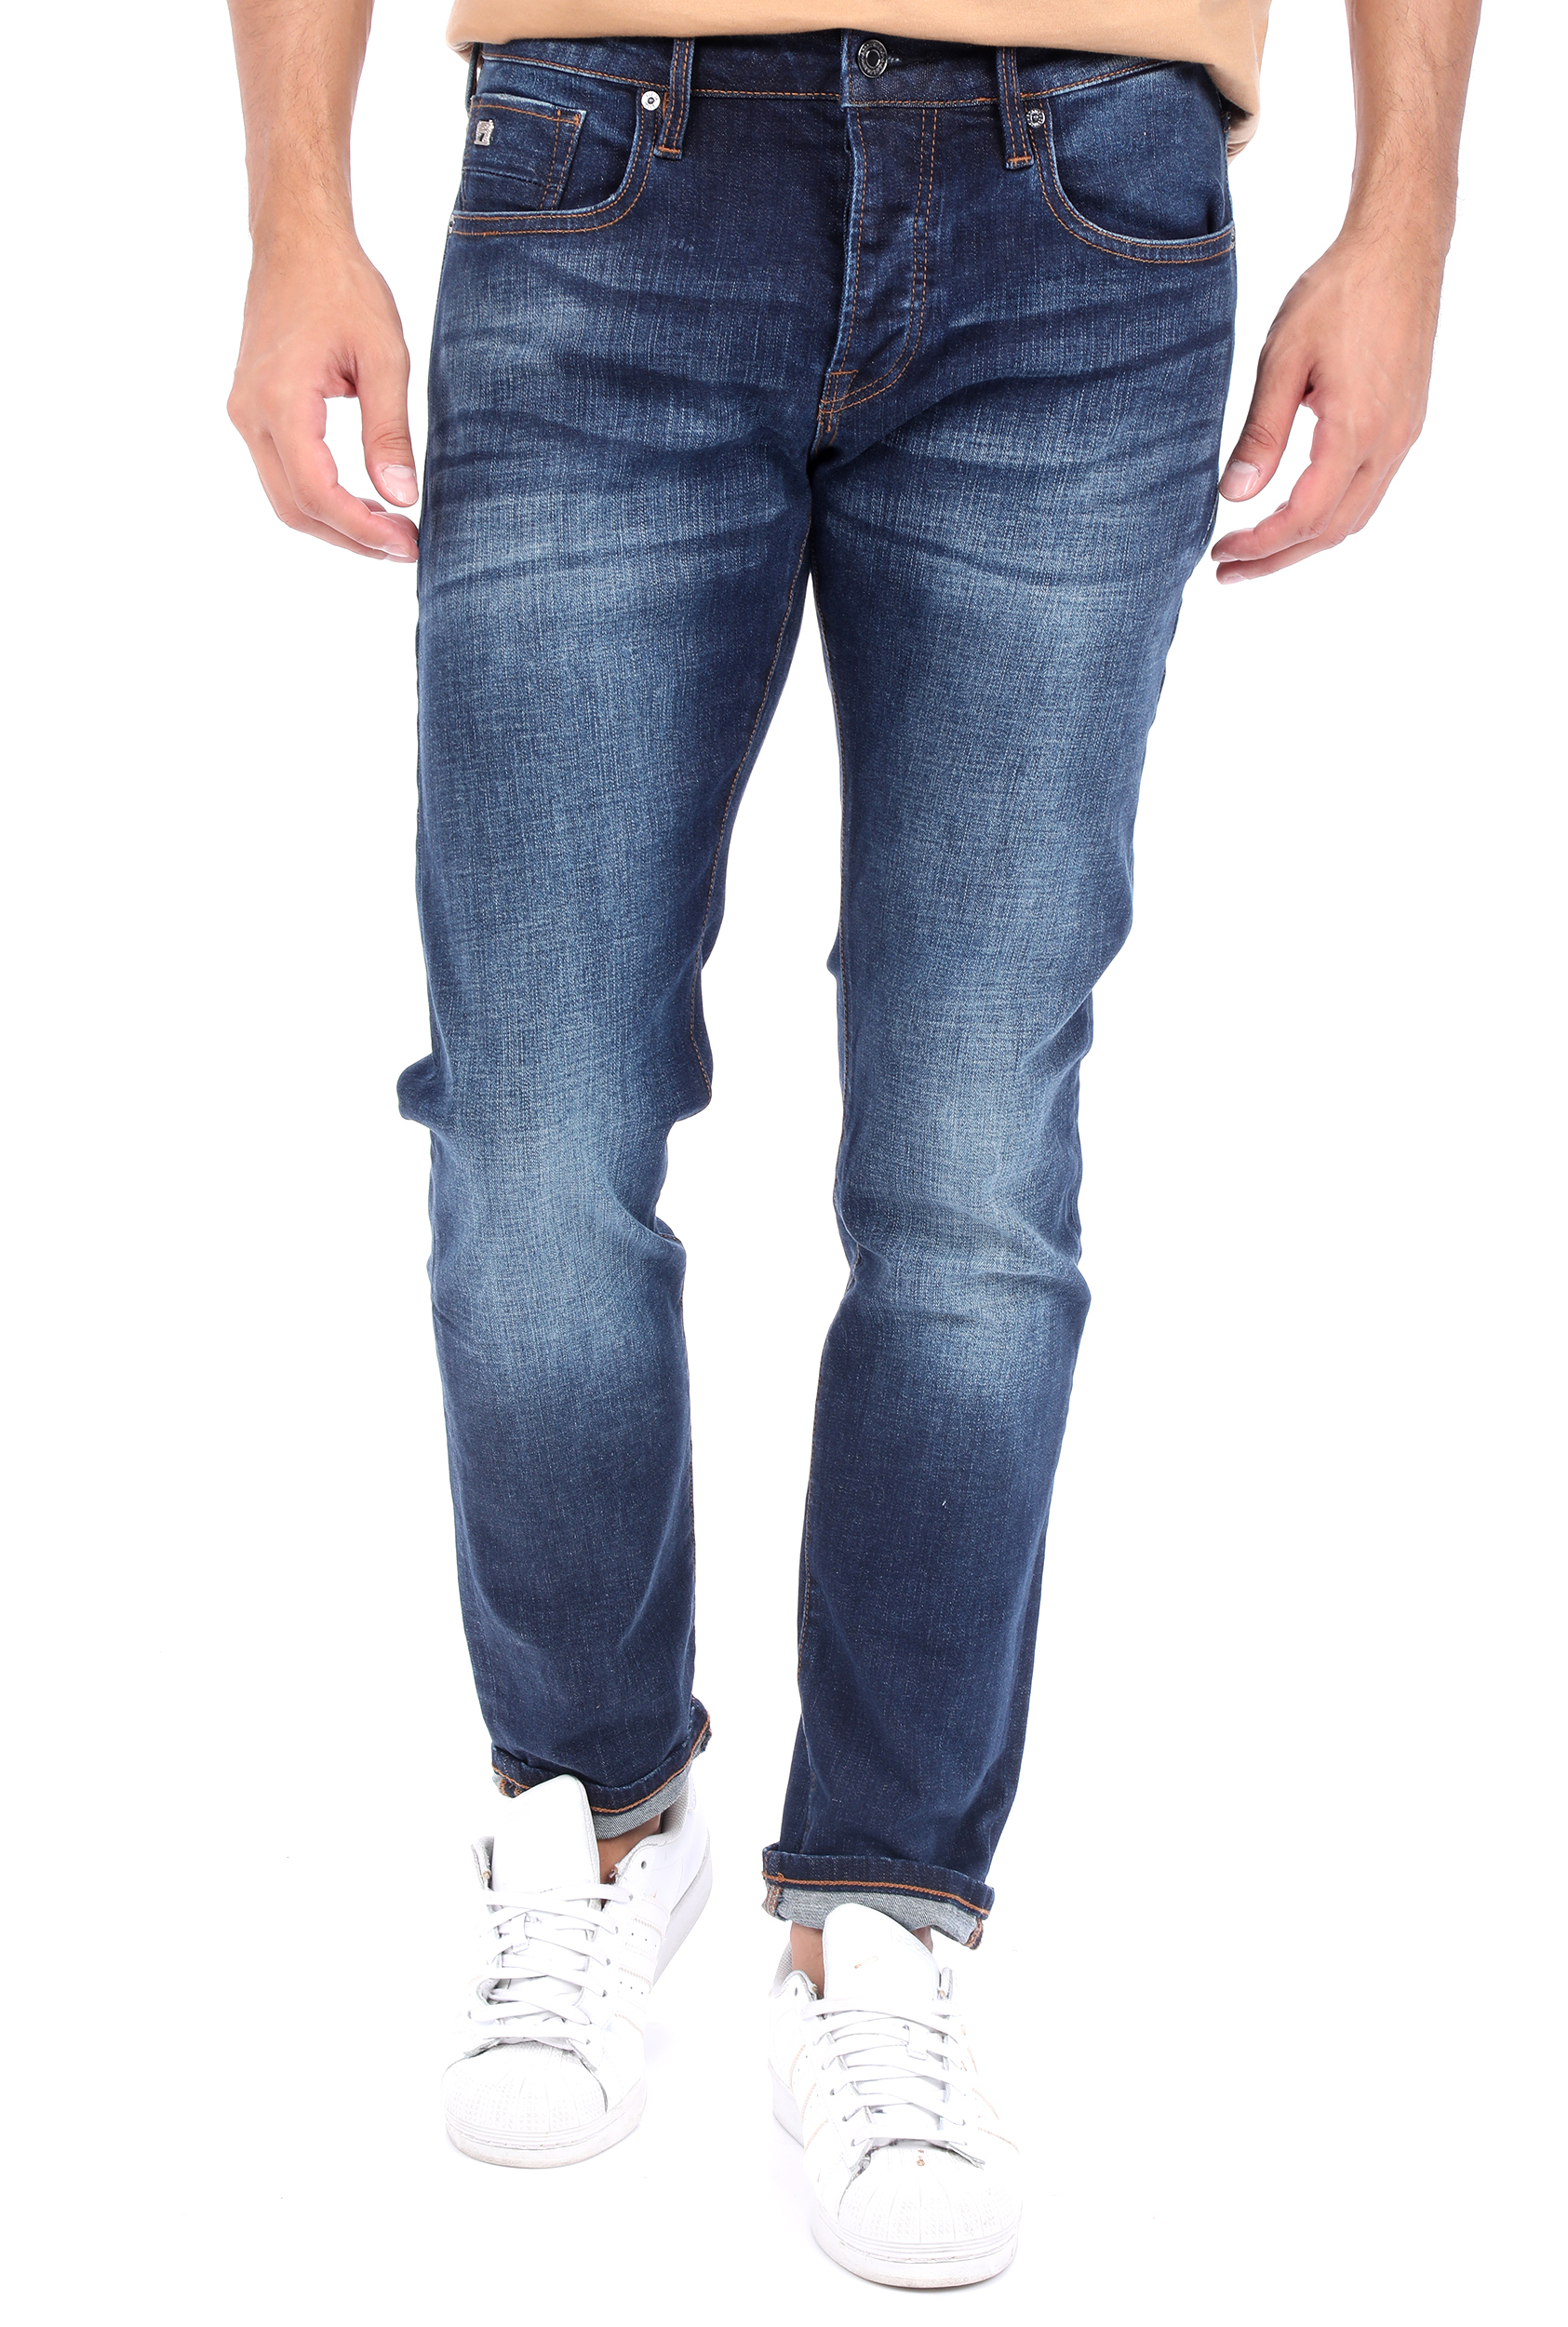 SCOTCH & SODA - Ανδρικό jean παντελόνι SCOTCH & SODA Ralston - Blizzard Blue μπλε